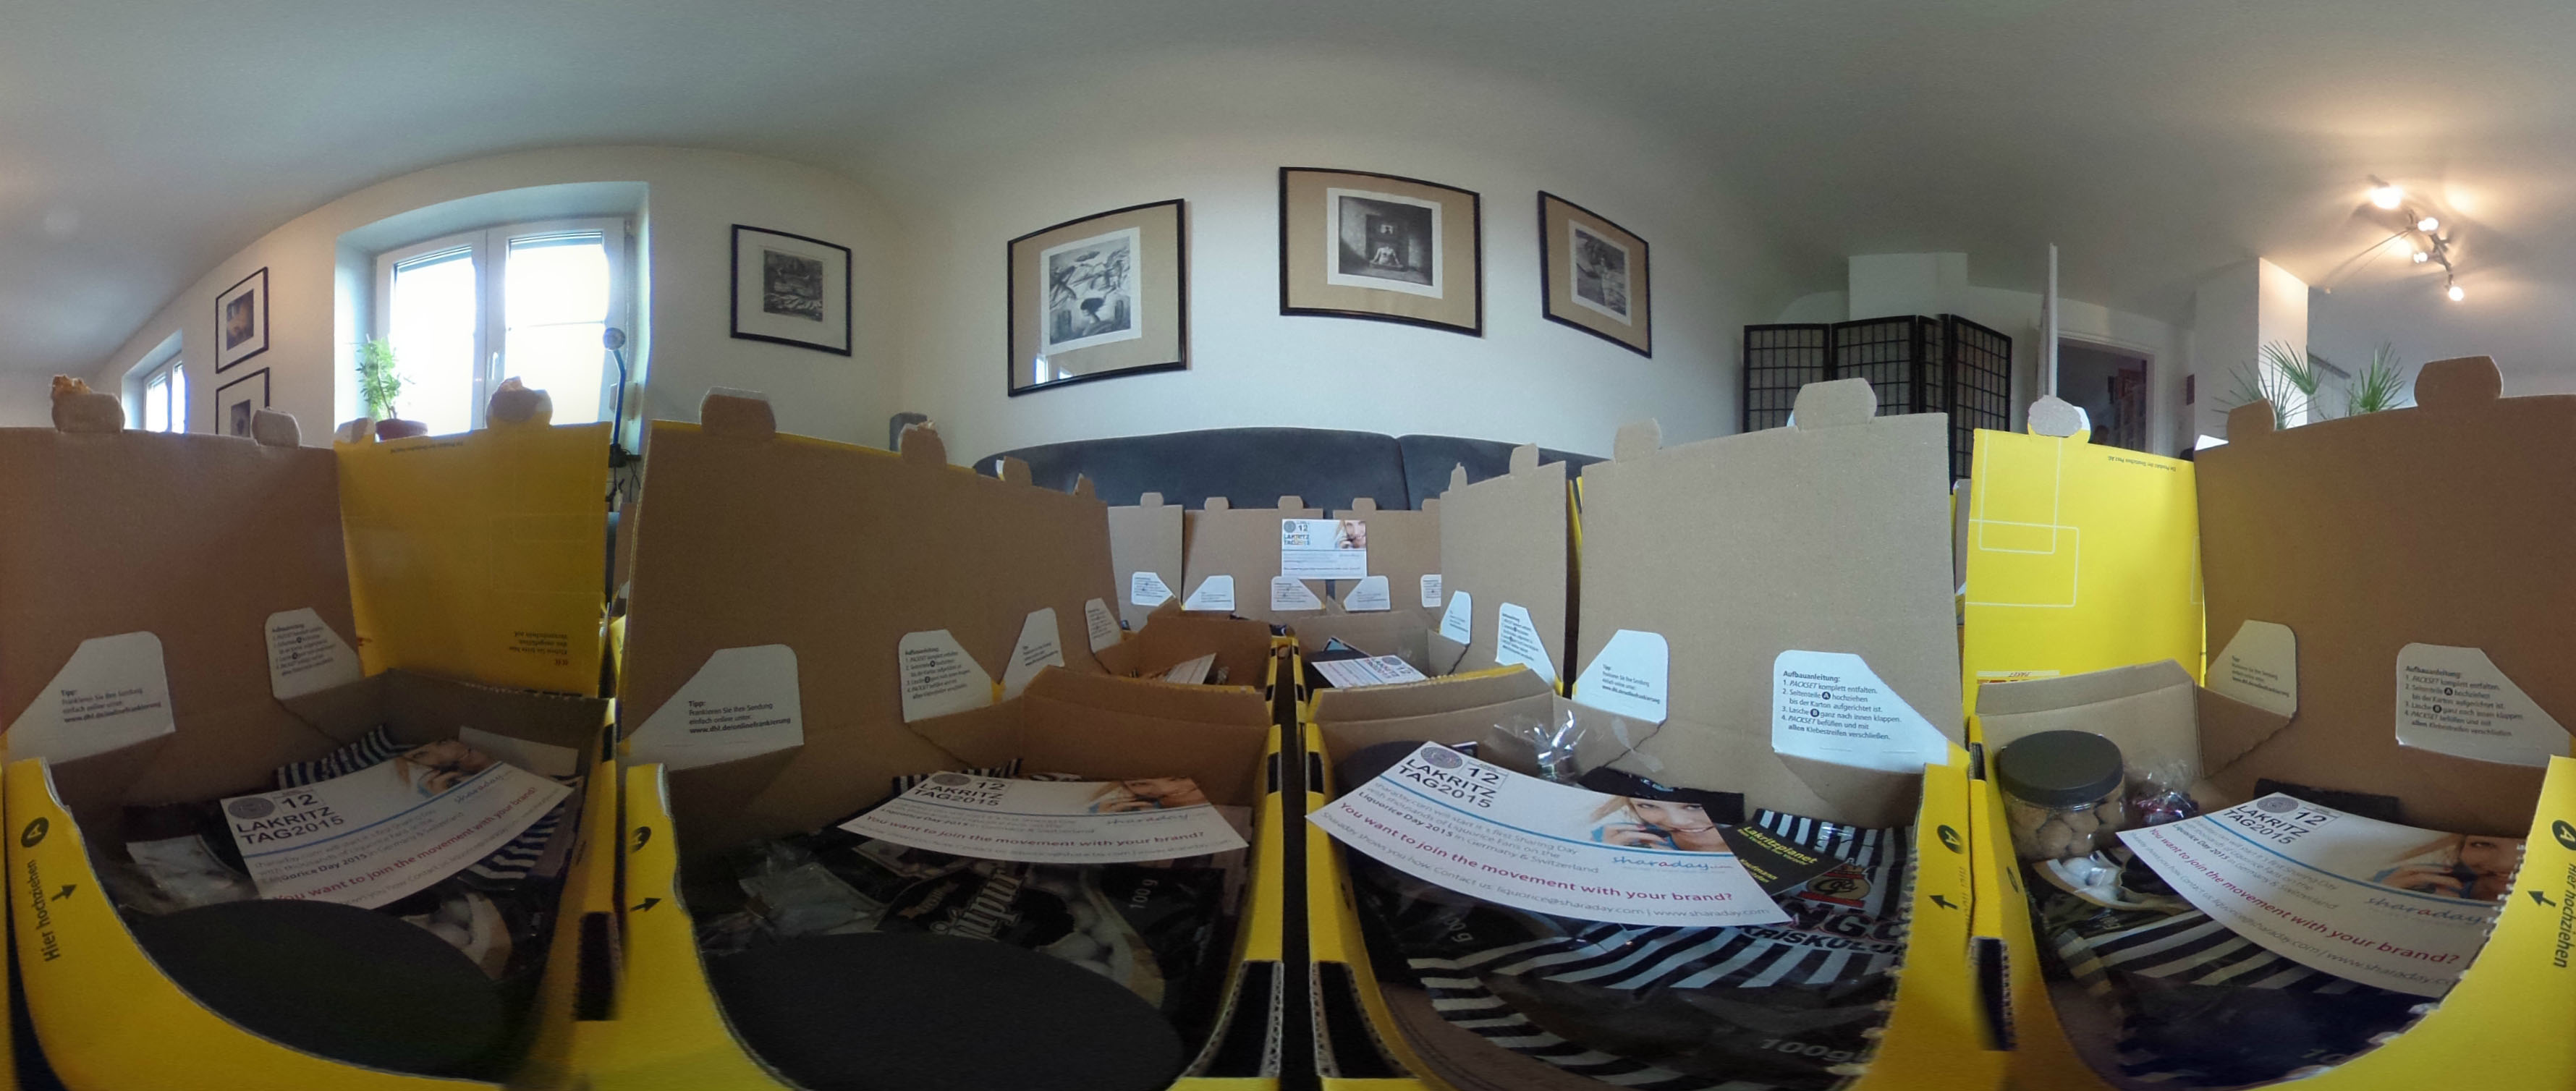 Lakritztag-Boxen in 360°